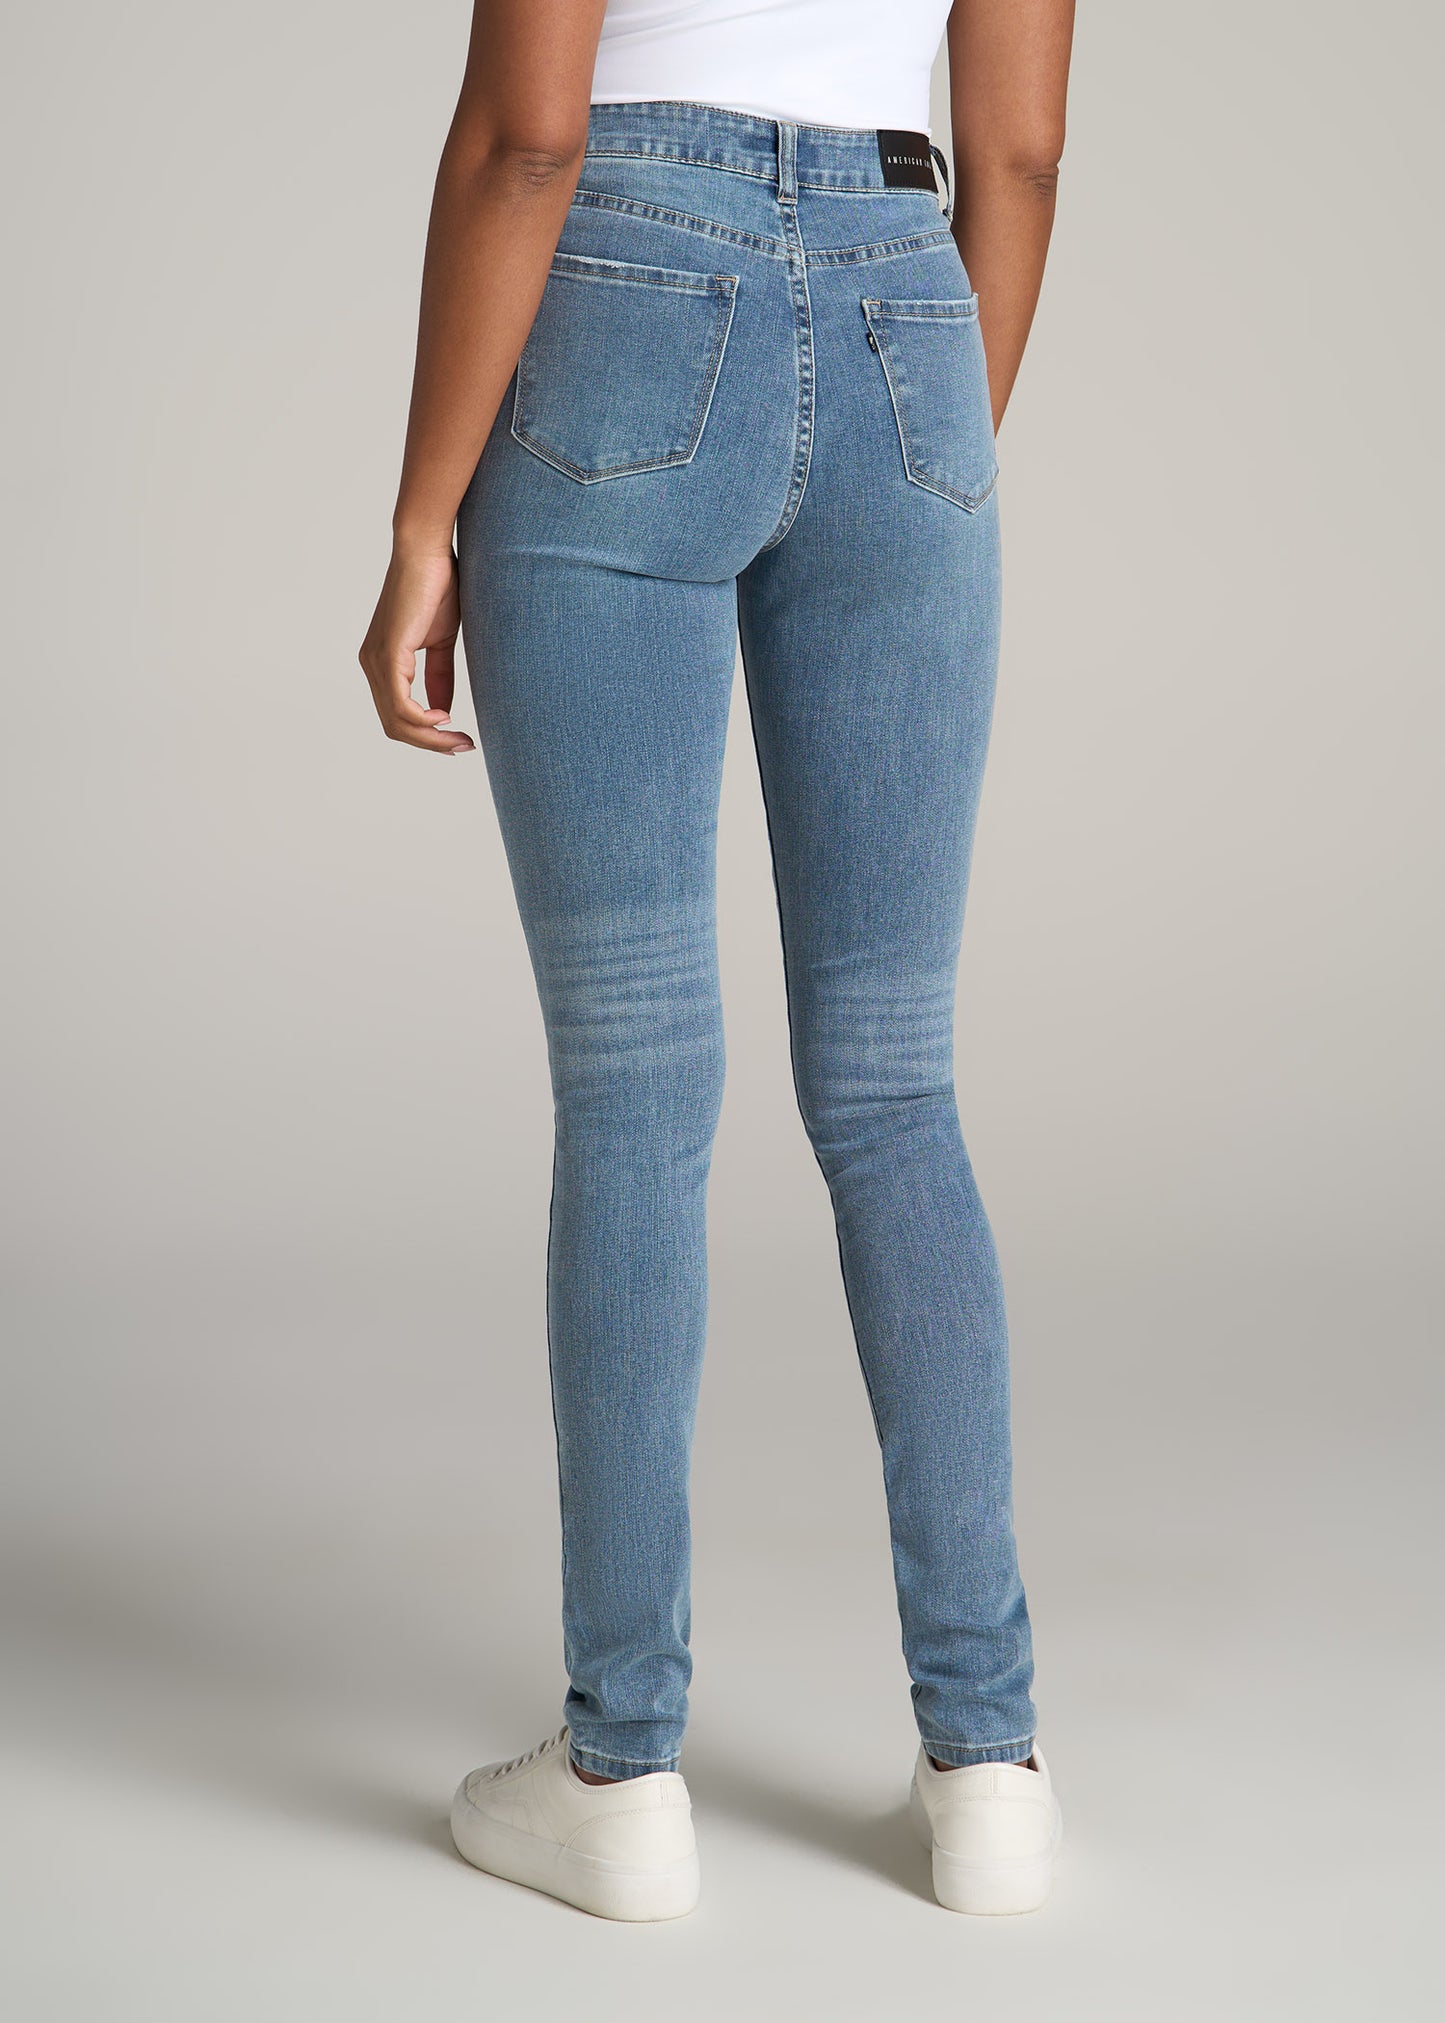 High-waist denim jeans